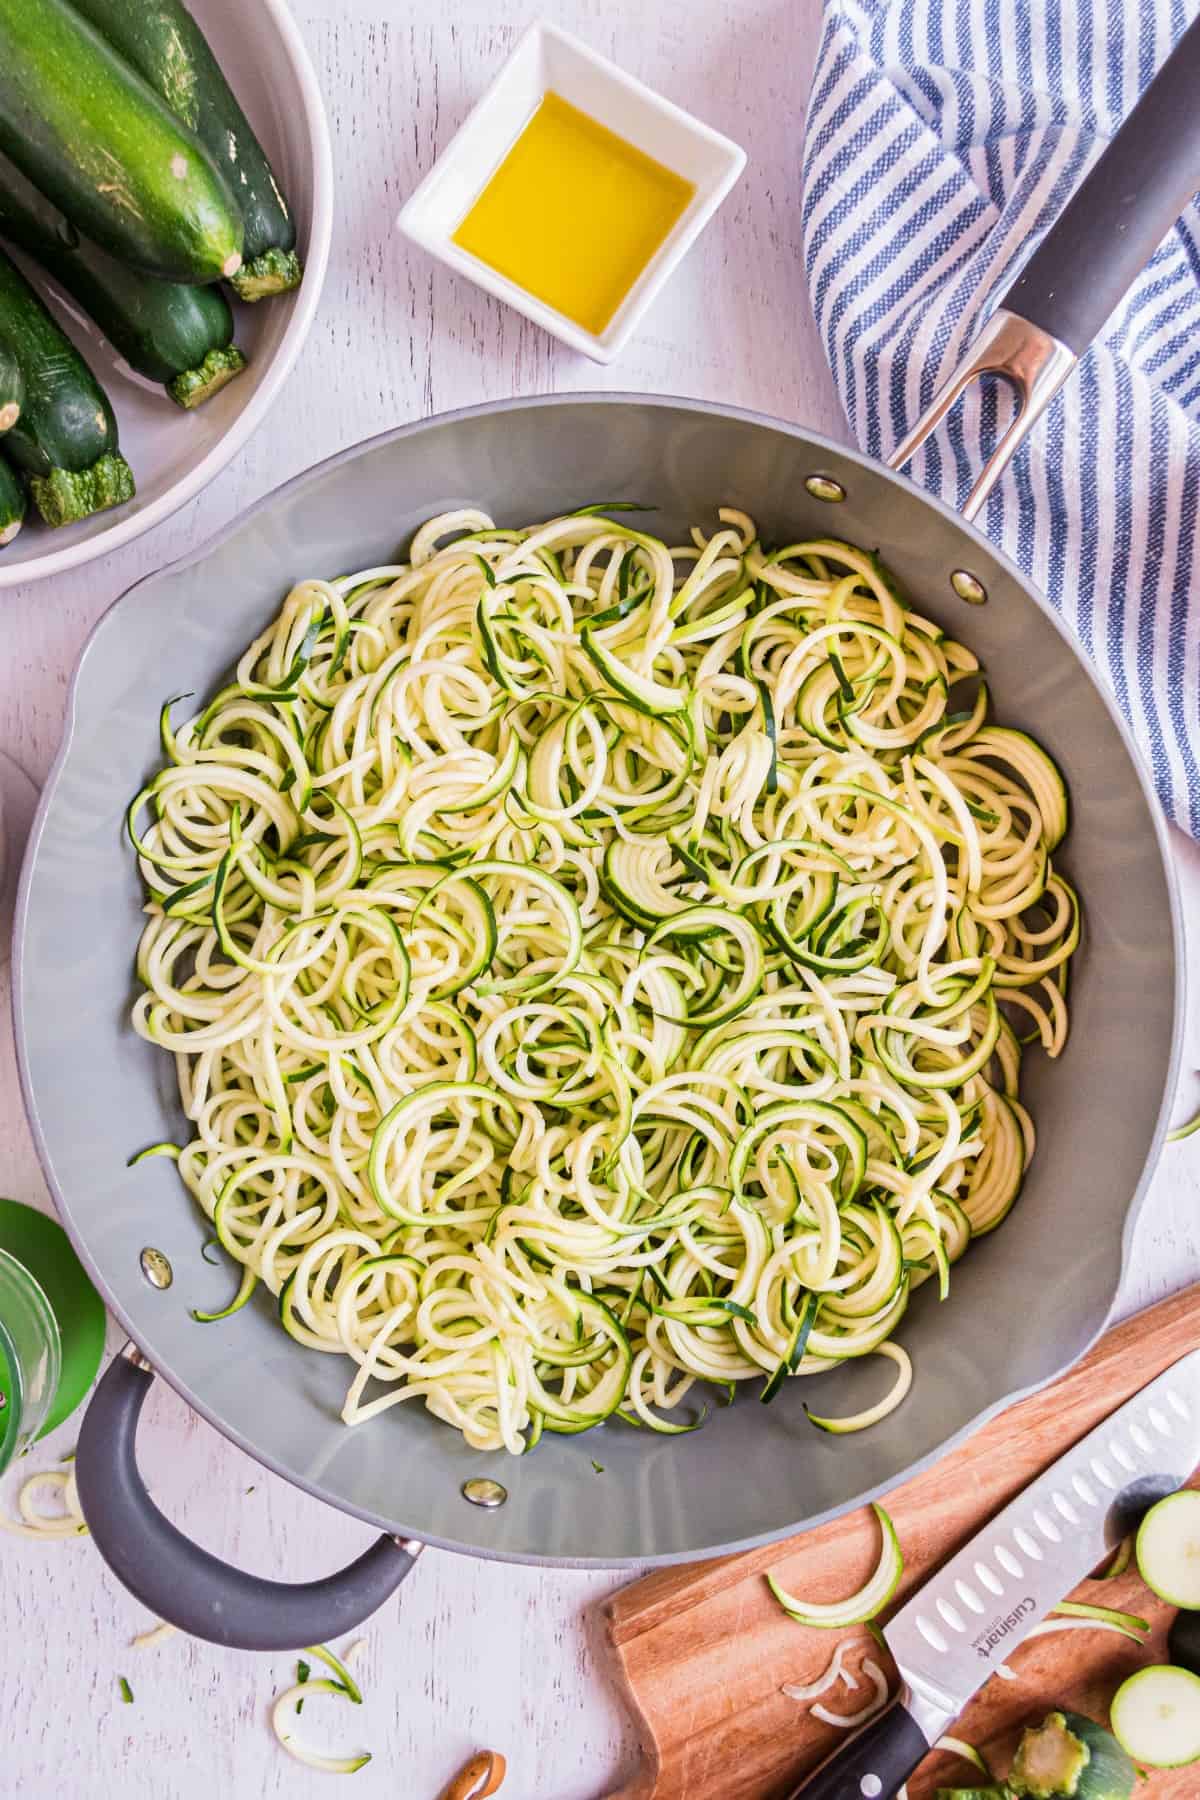 https://www.shugarysweets.com/wp-content/uploads/2020/07/zucchini-noodles-3.jpg